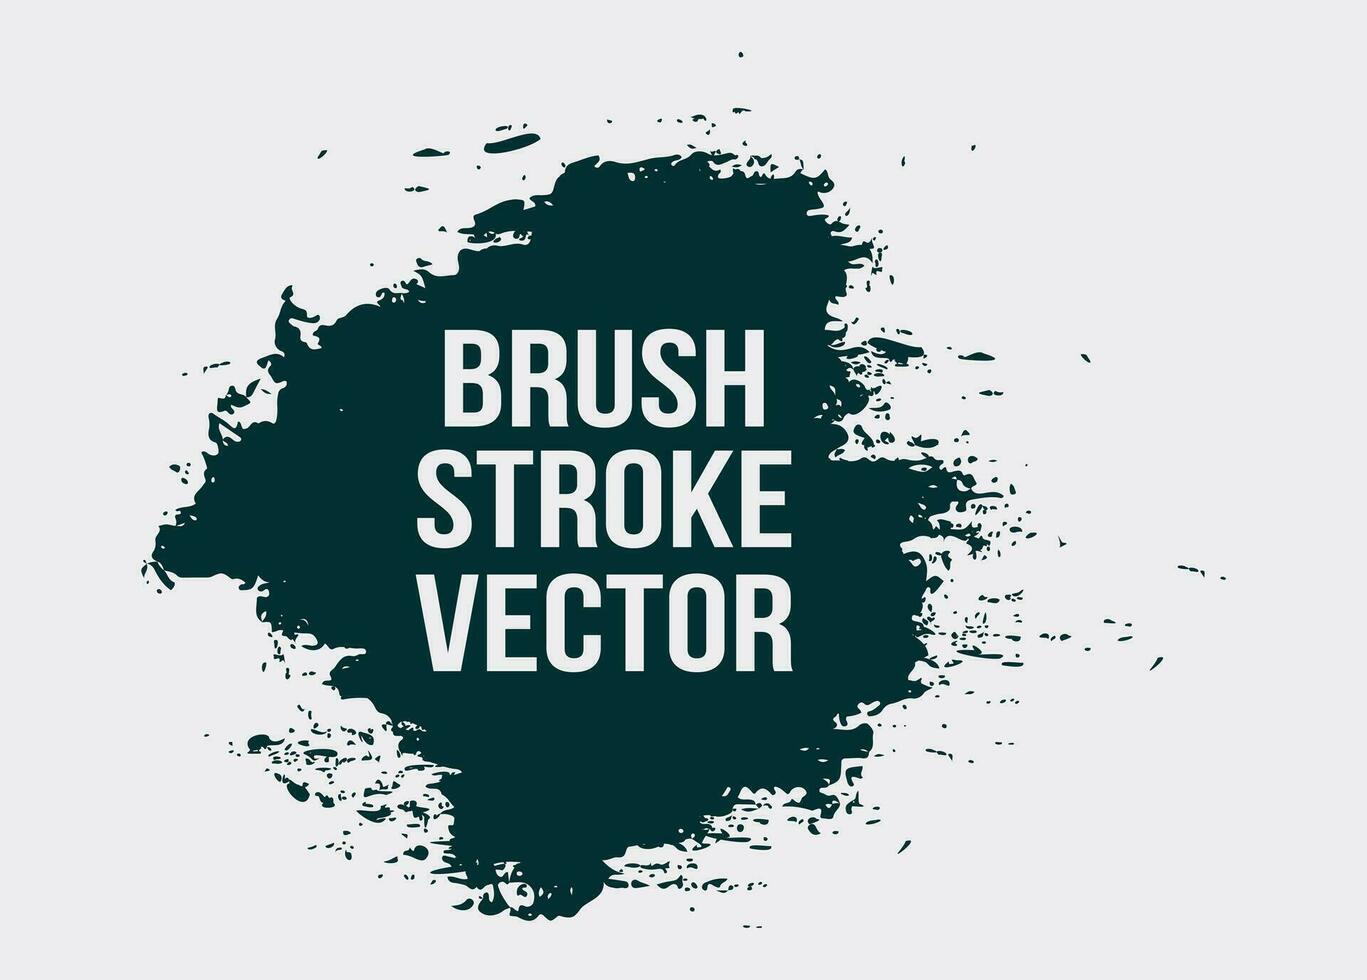 Brushstroke texture vector isolated background